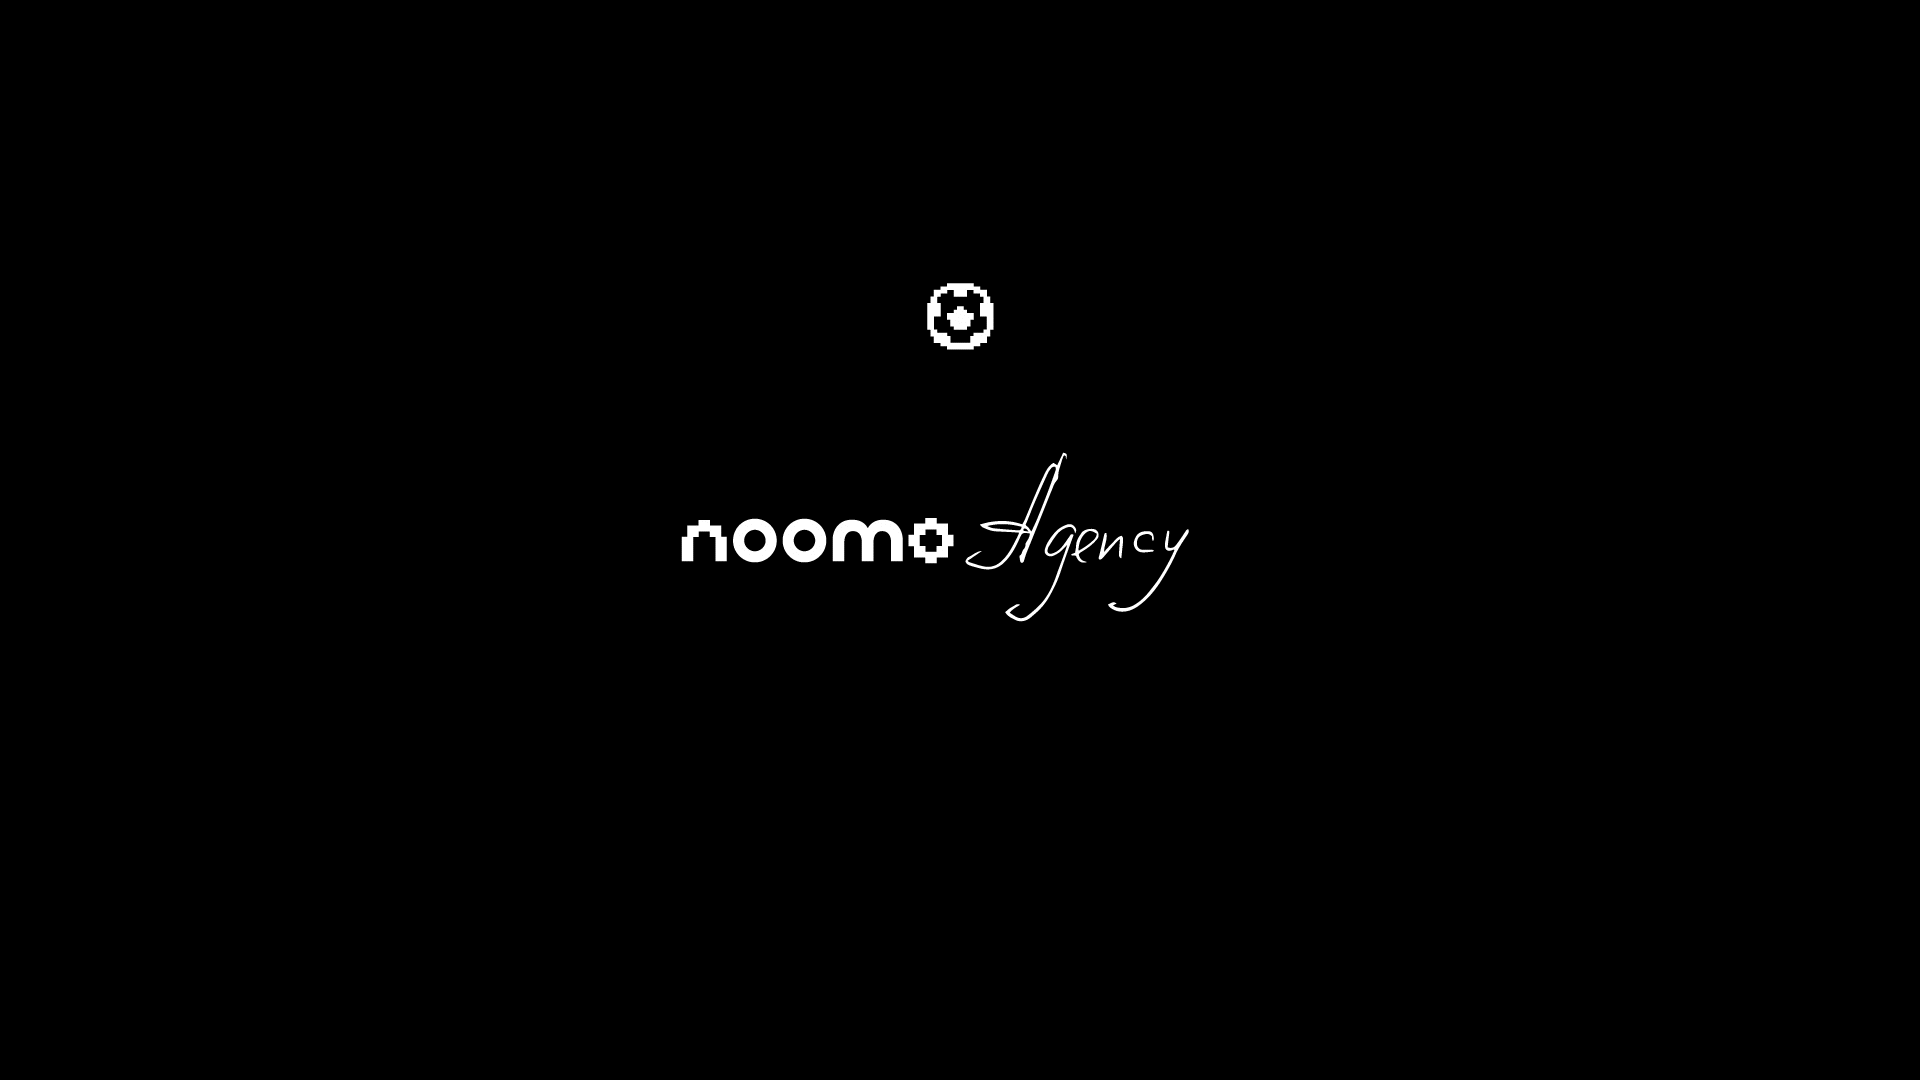 Noomo agancy - dynamic brand identity